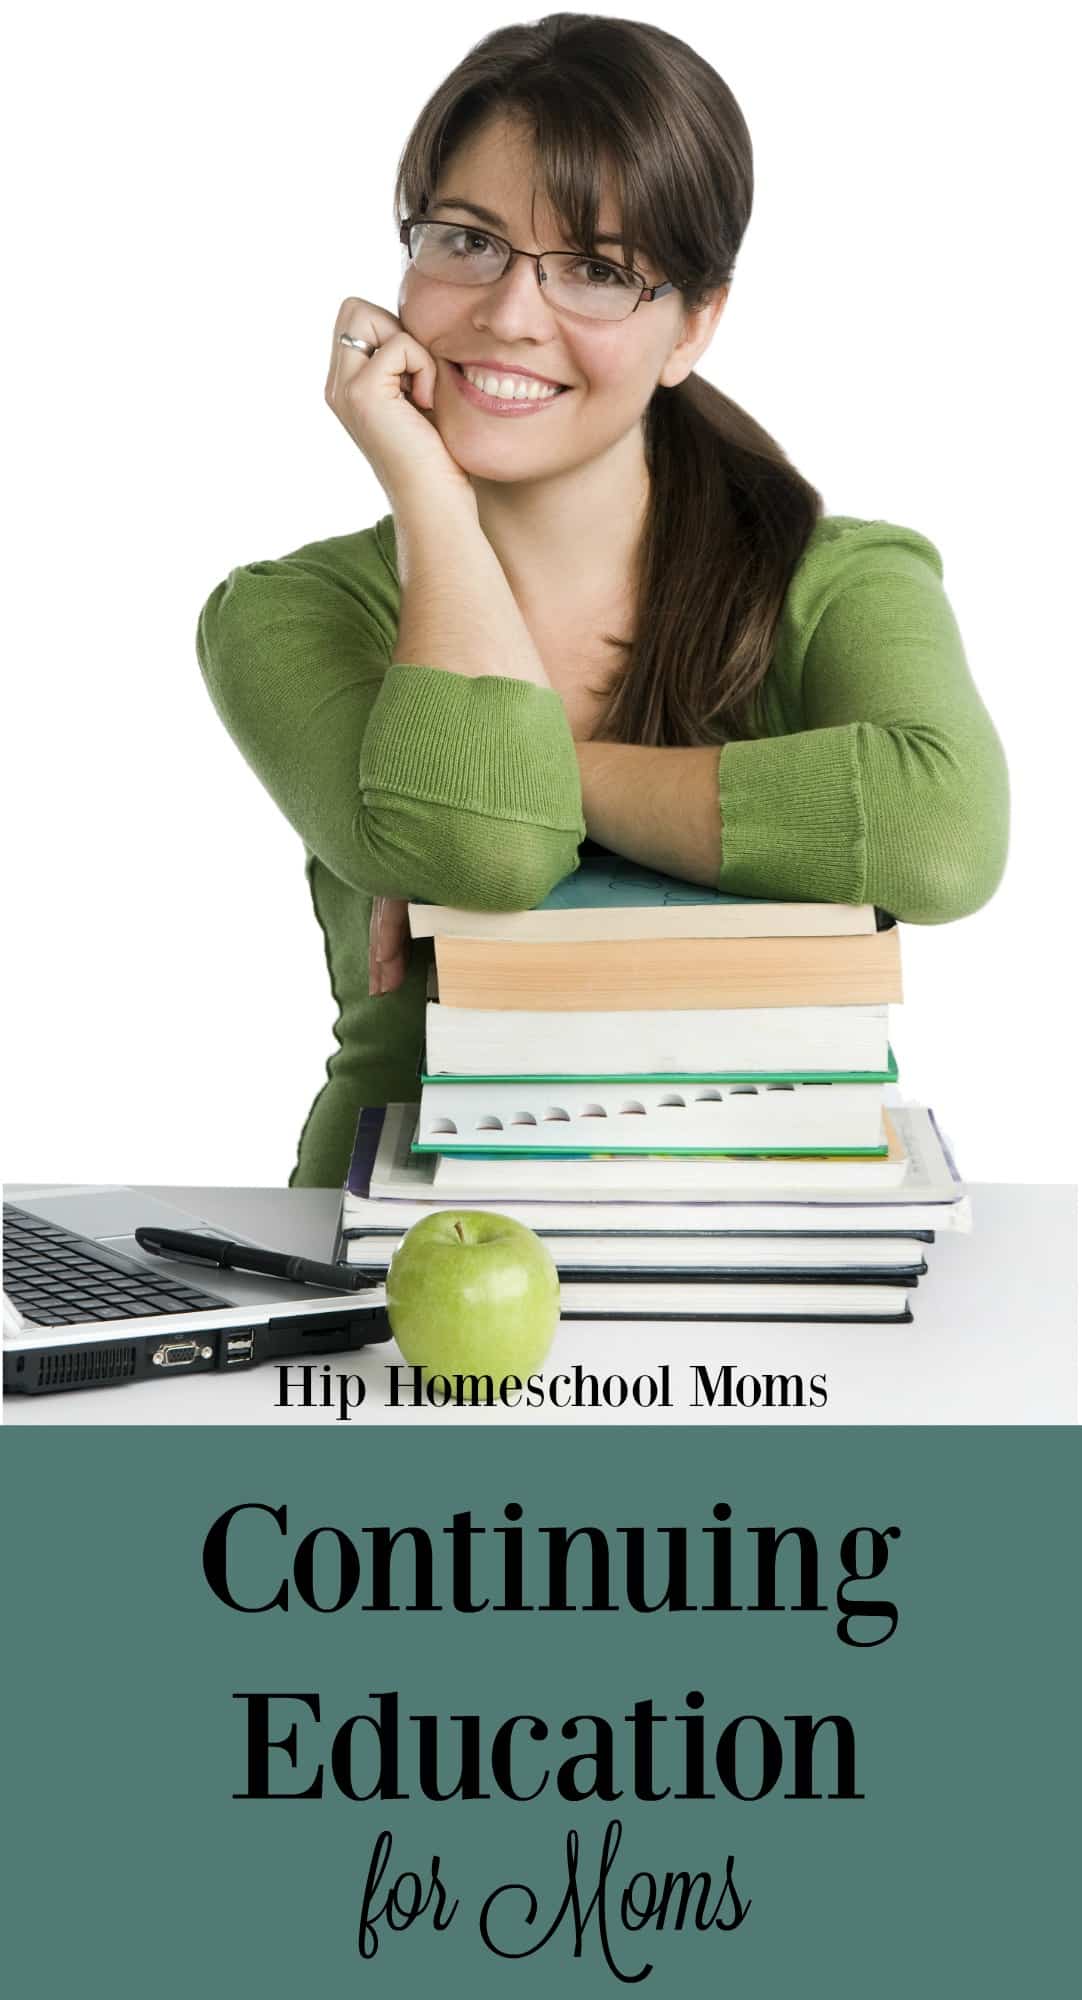 Continuing Education for Moms |Hip Homeschool Moms